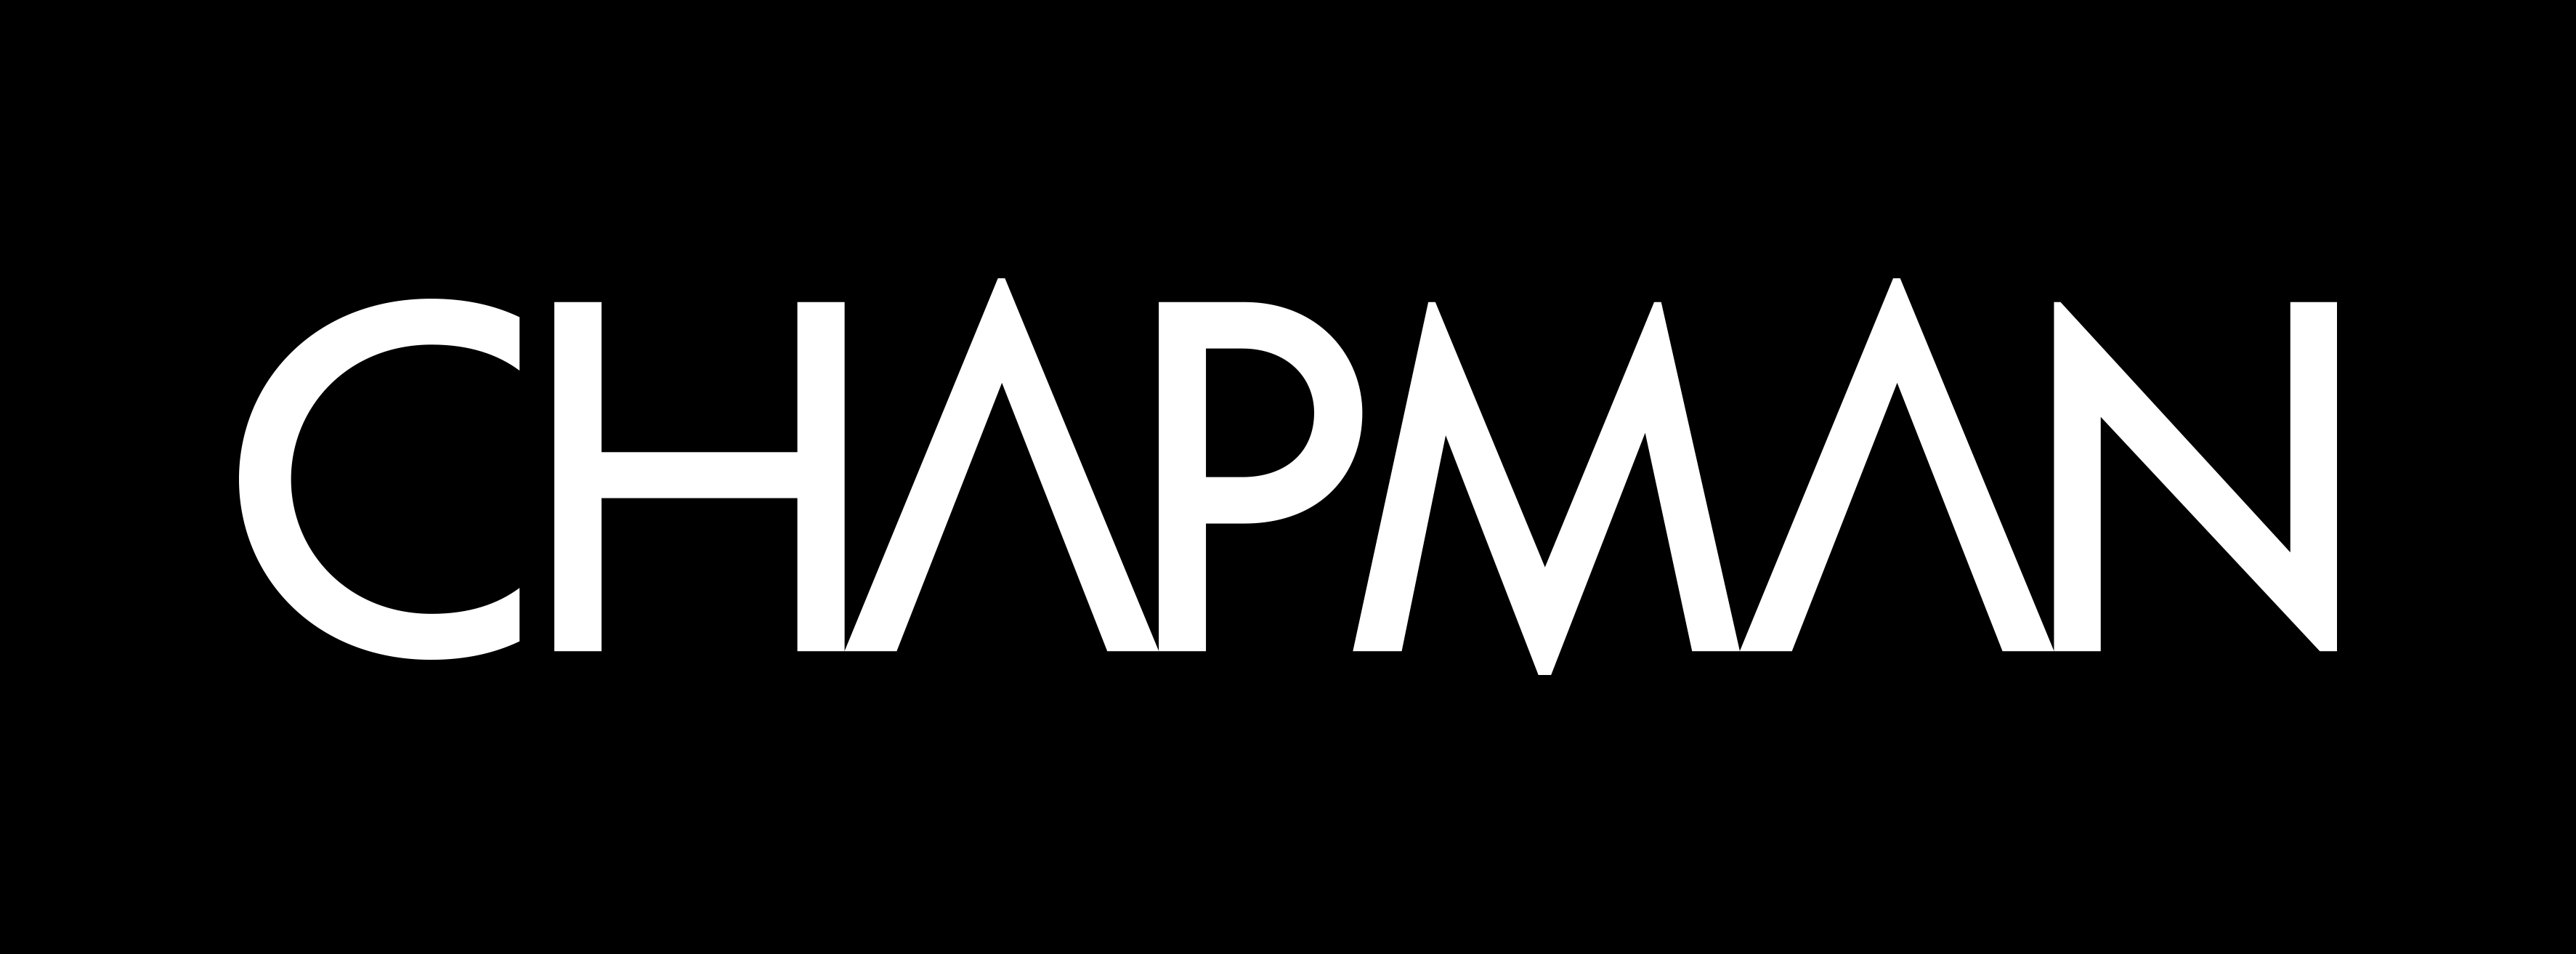 Chapman Logo Design.